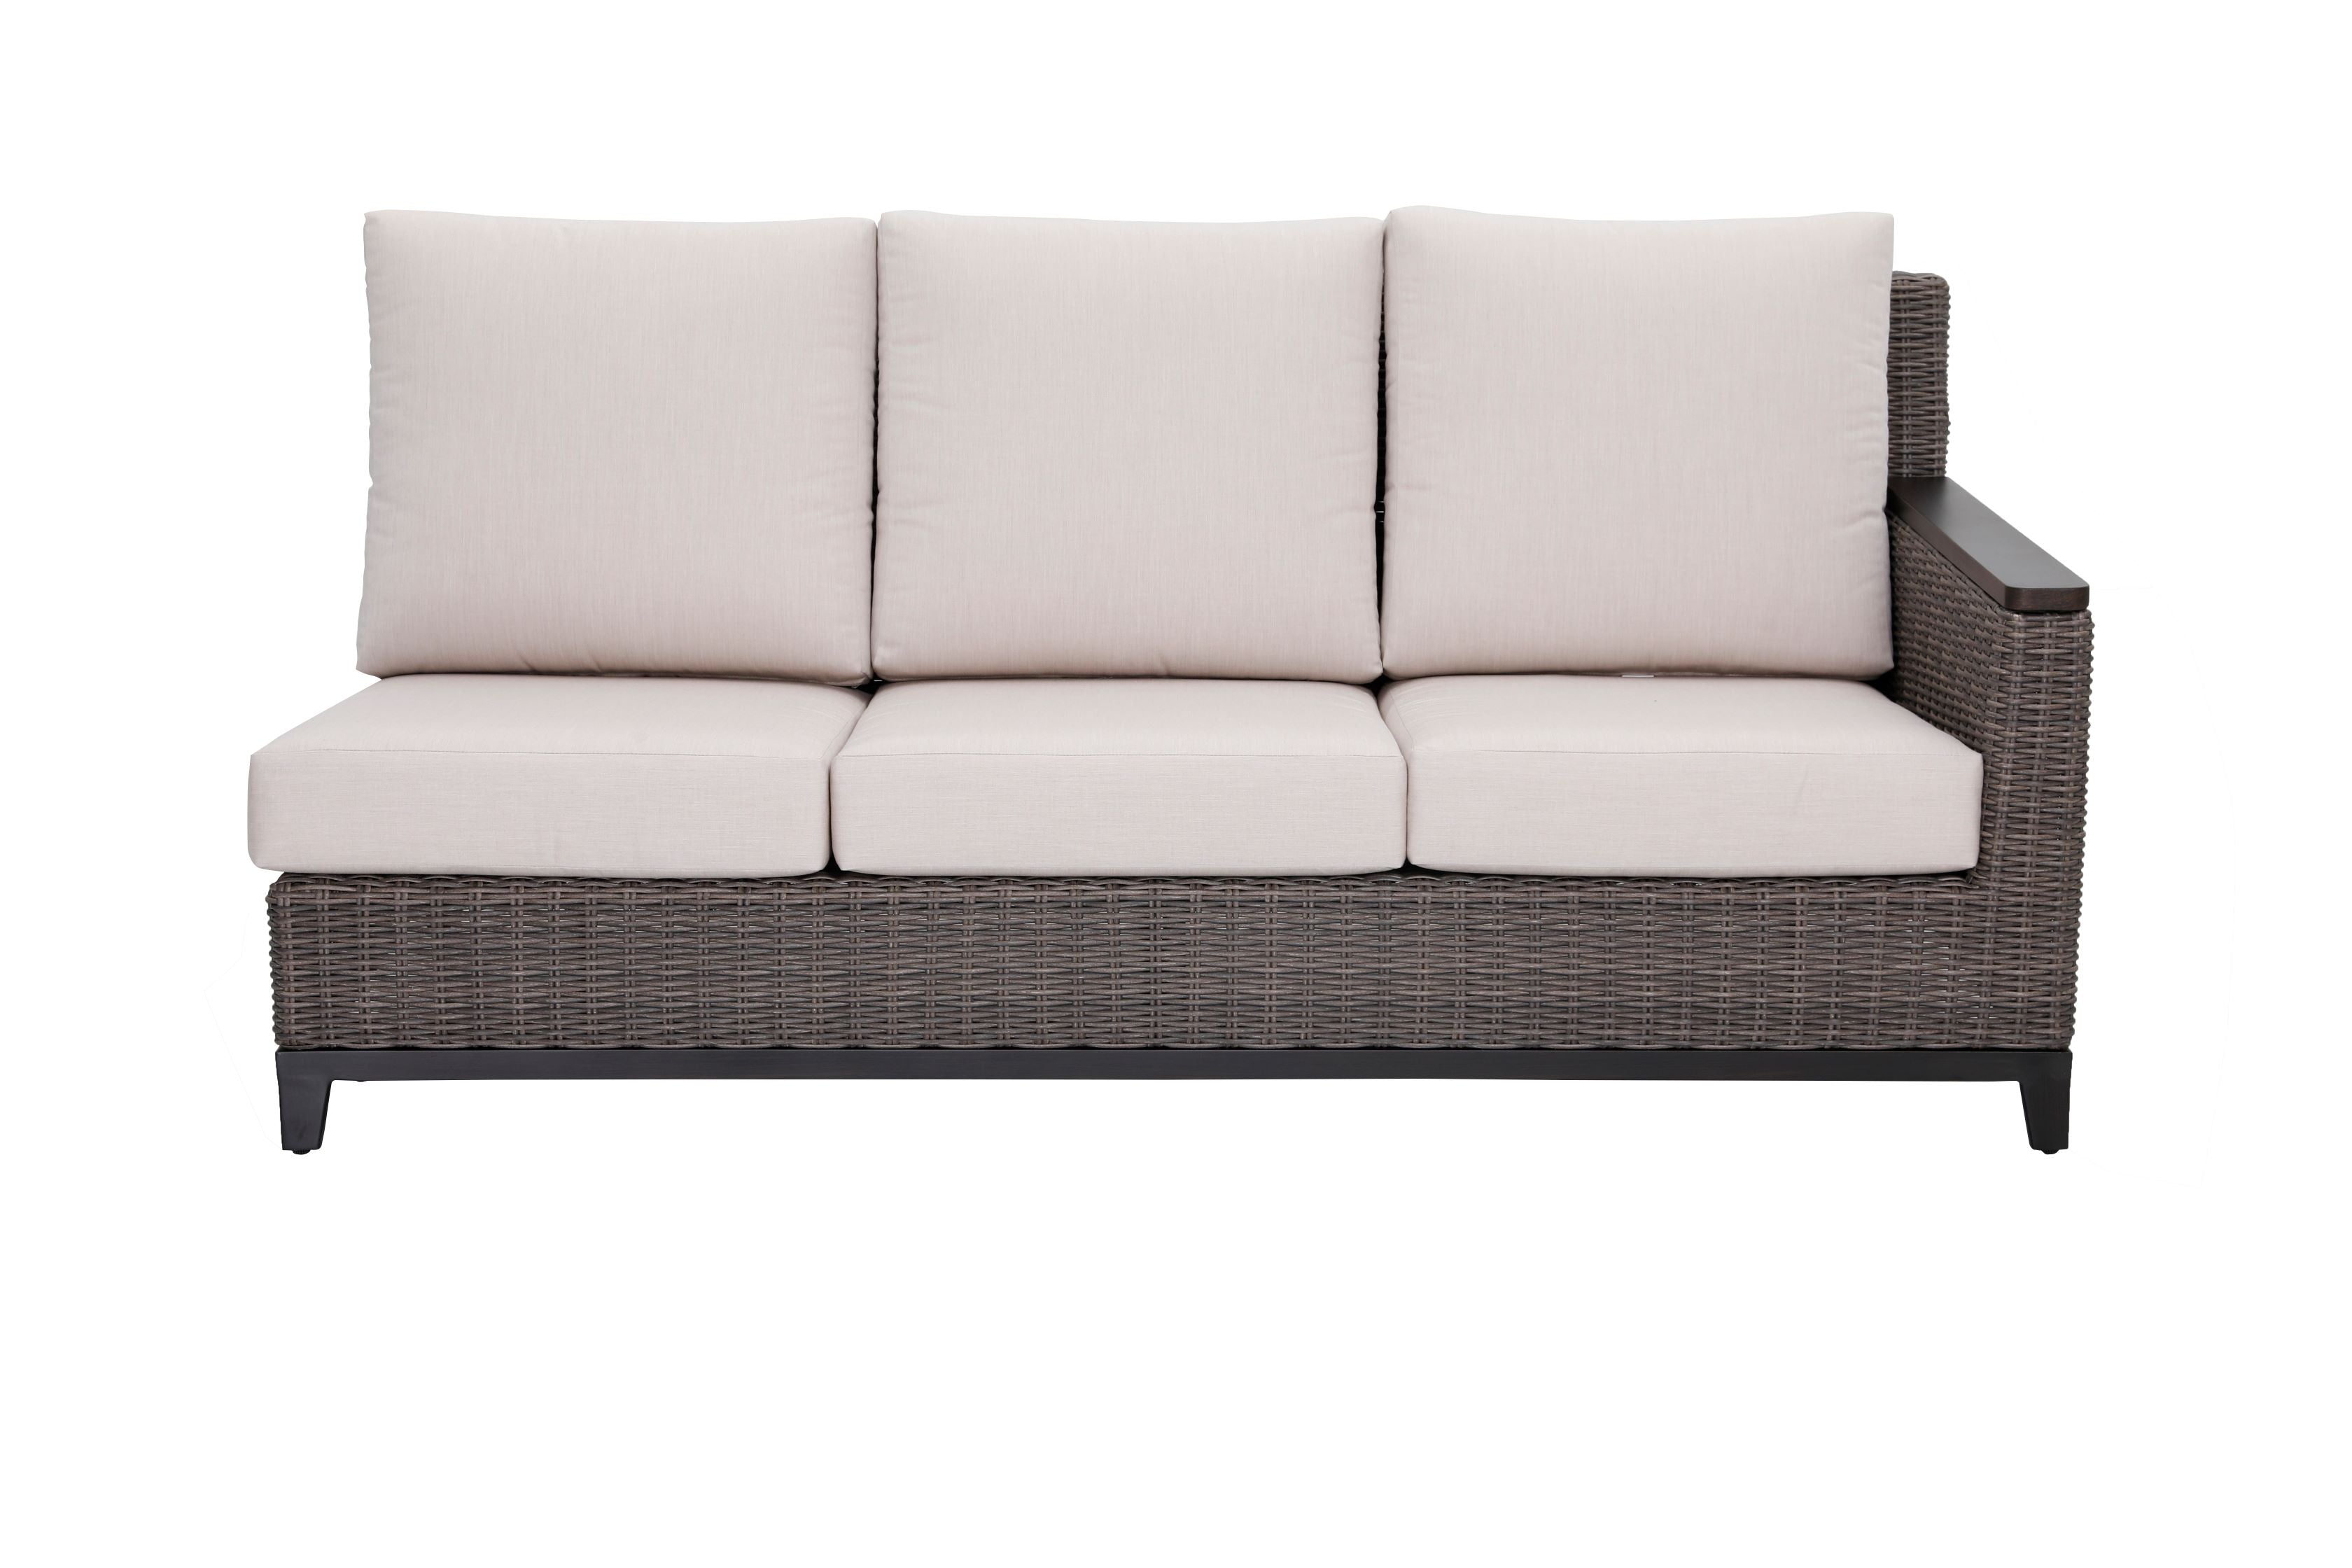 Patio Time Beaufort 4-Piece Wicker Sectional Sofa Set